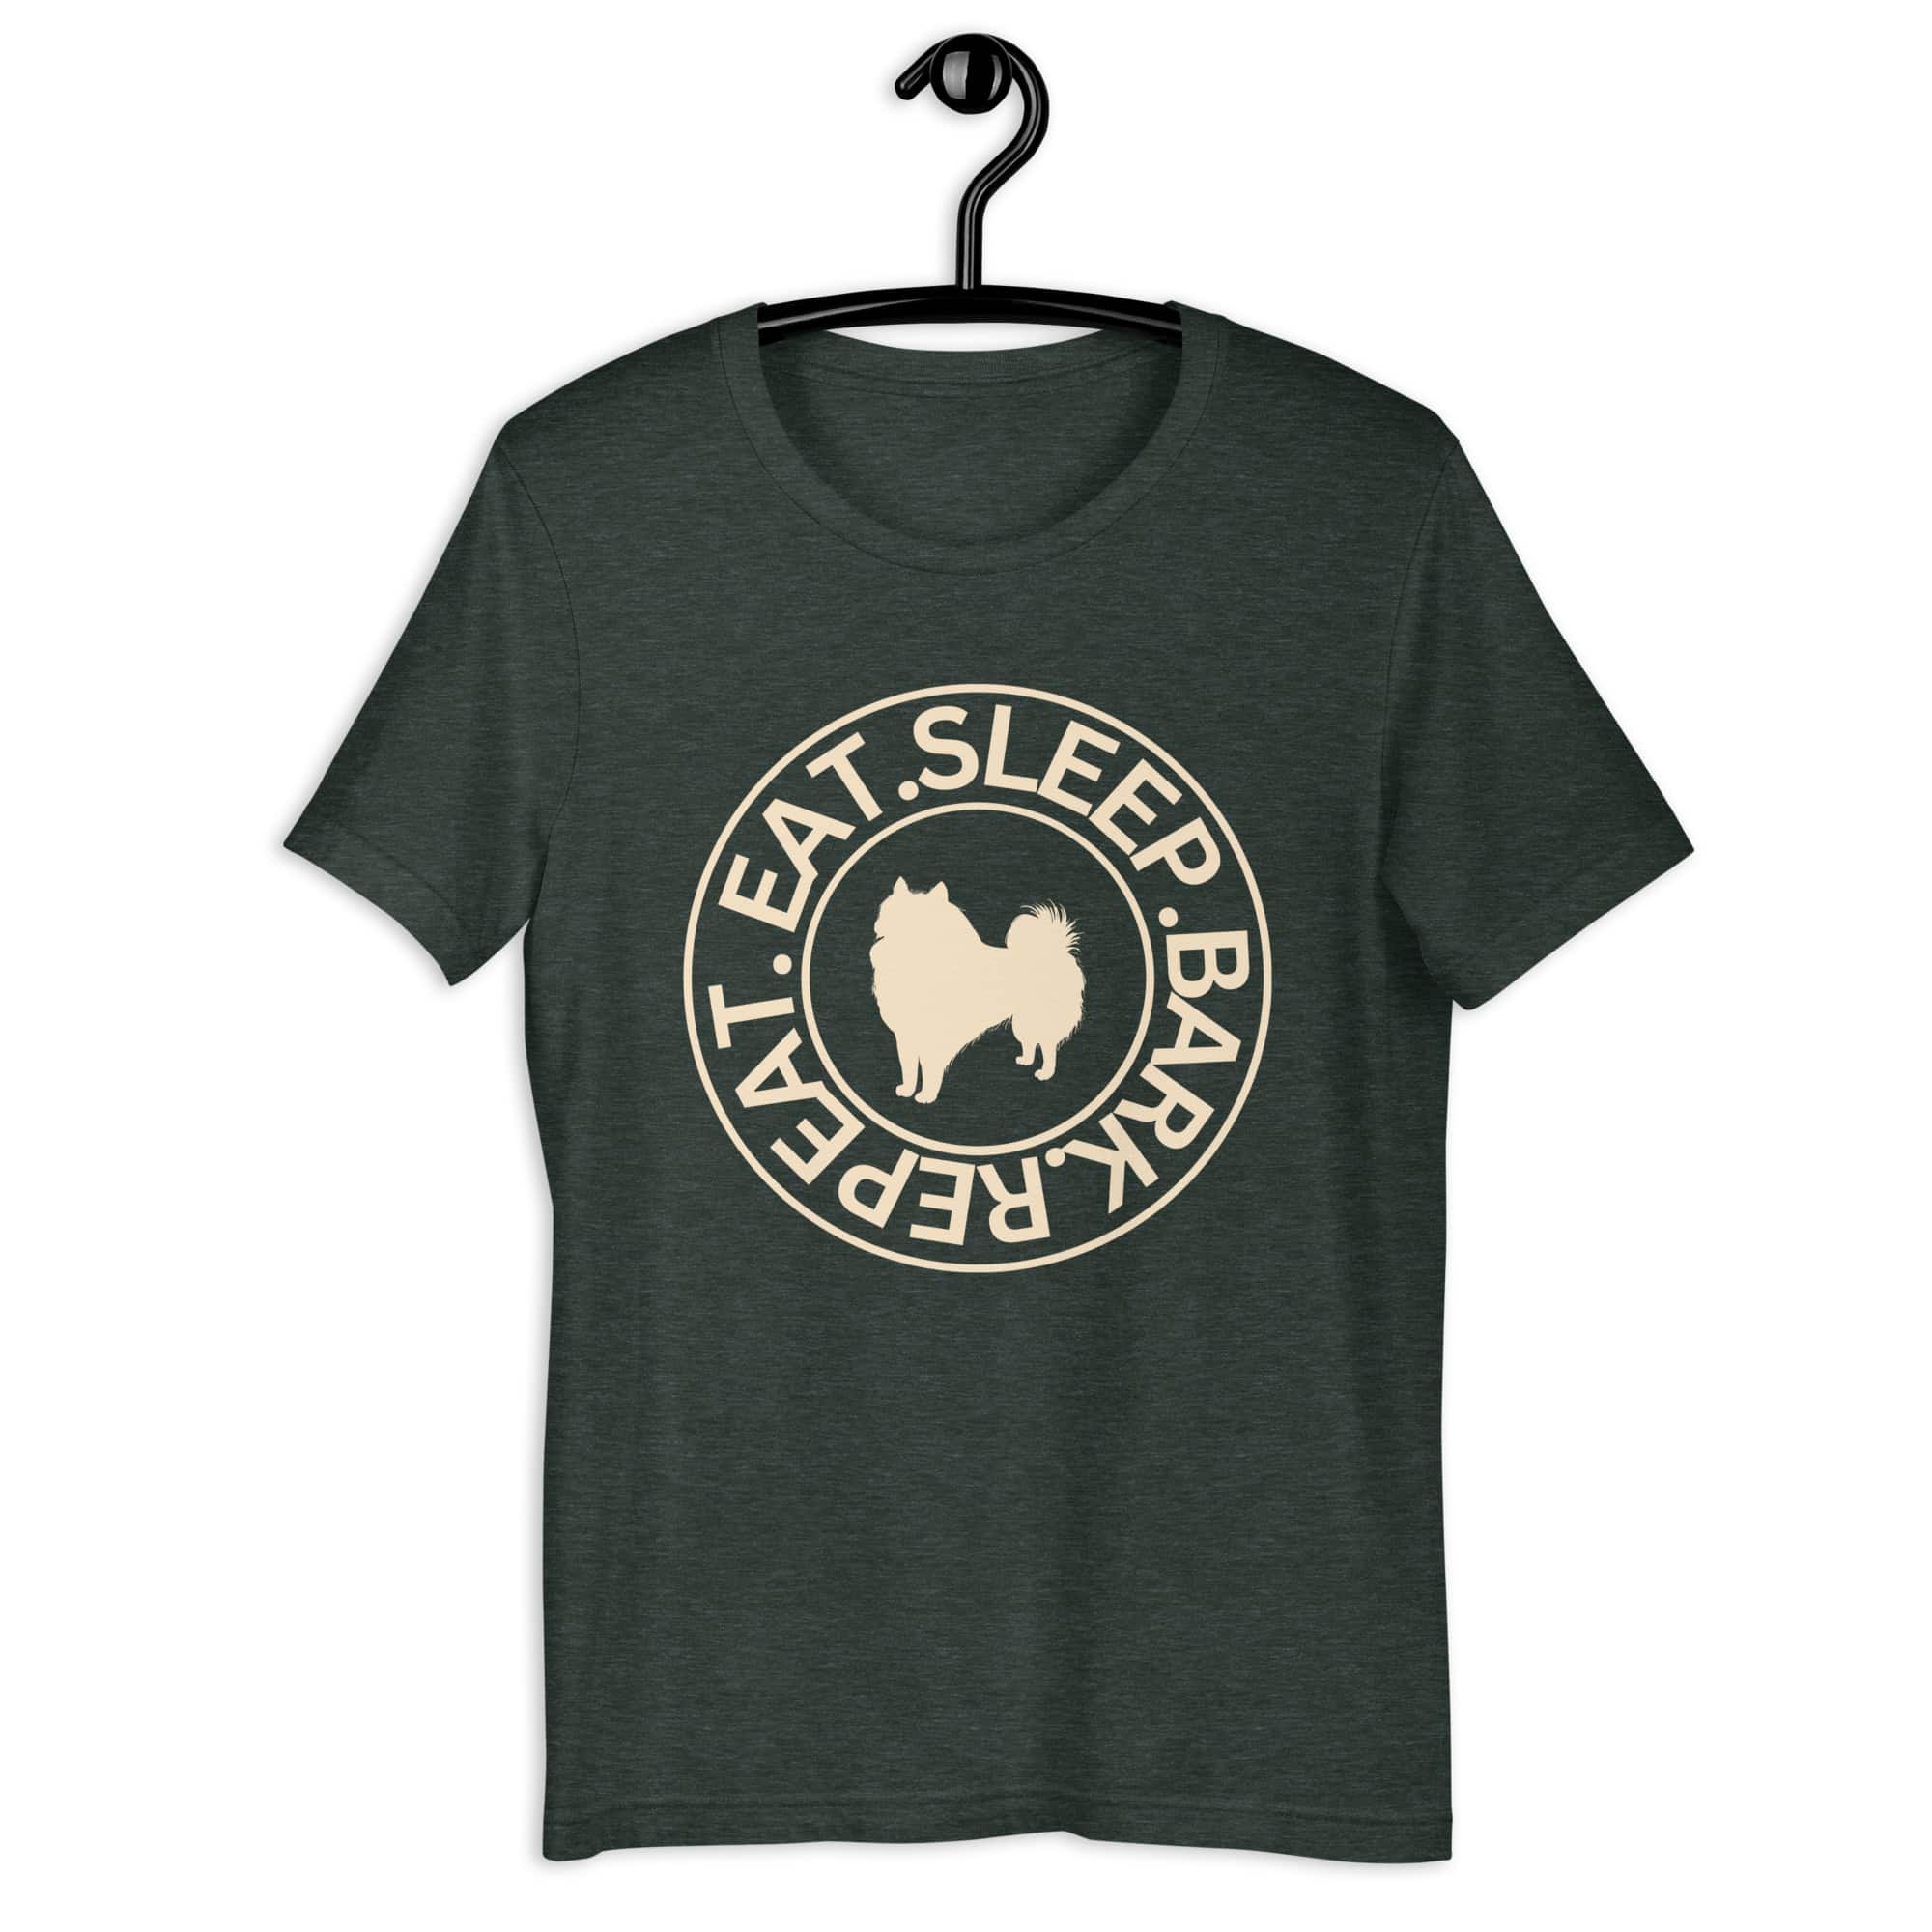 Eat Sleep Bark Repeat Poodle Unisex T-Shirt. Heather Forest